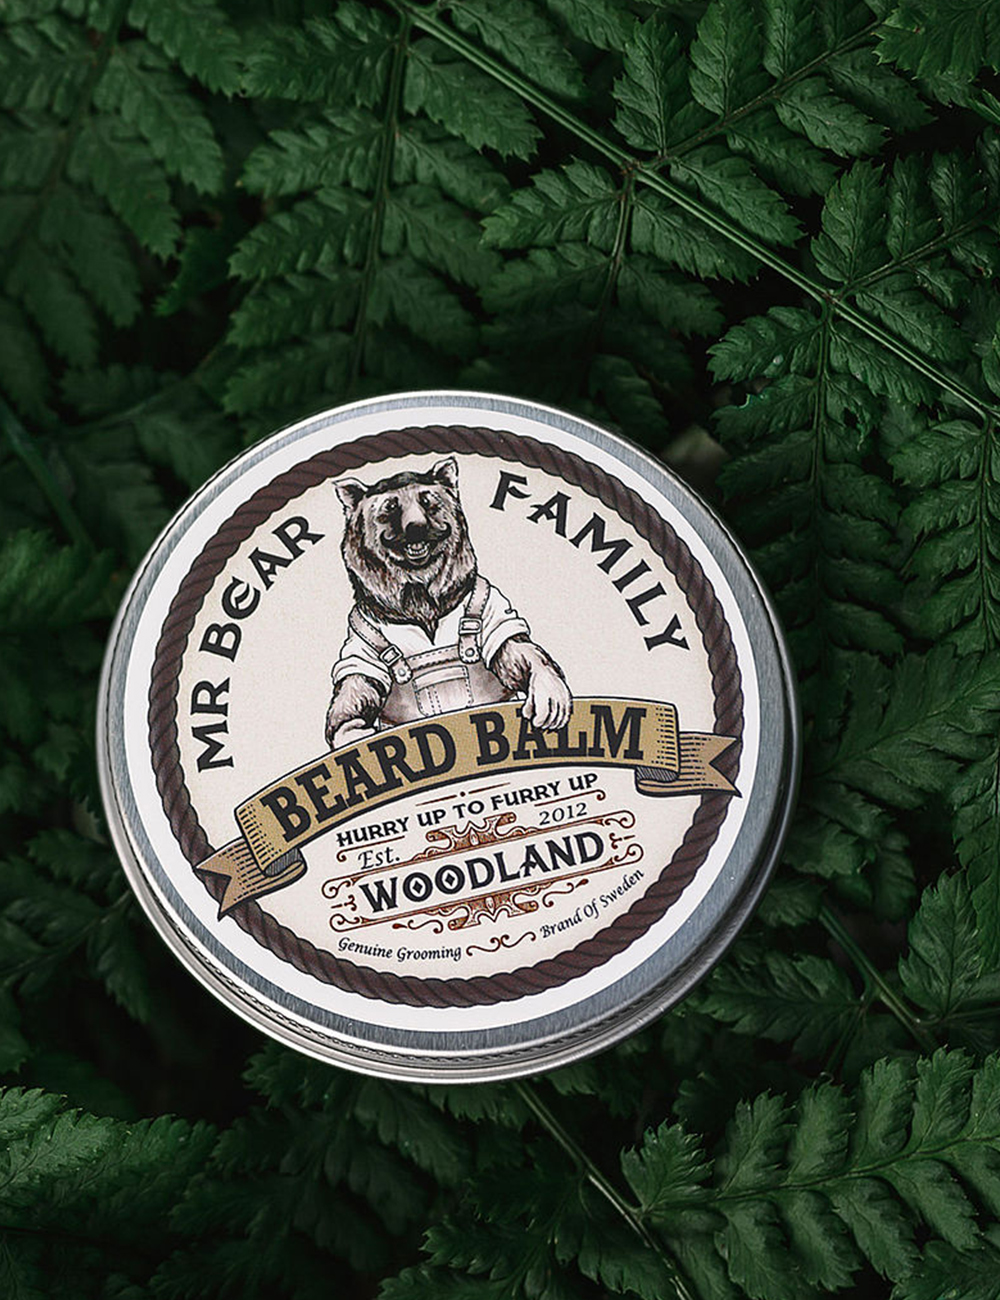 Mr Bear Family Beard Balm Woodland 2